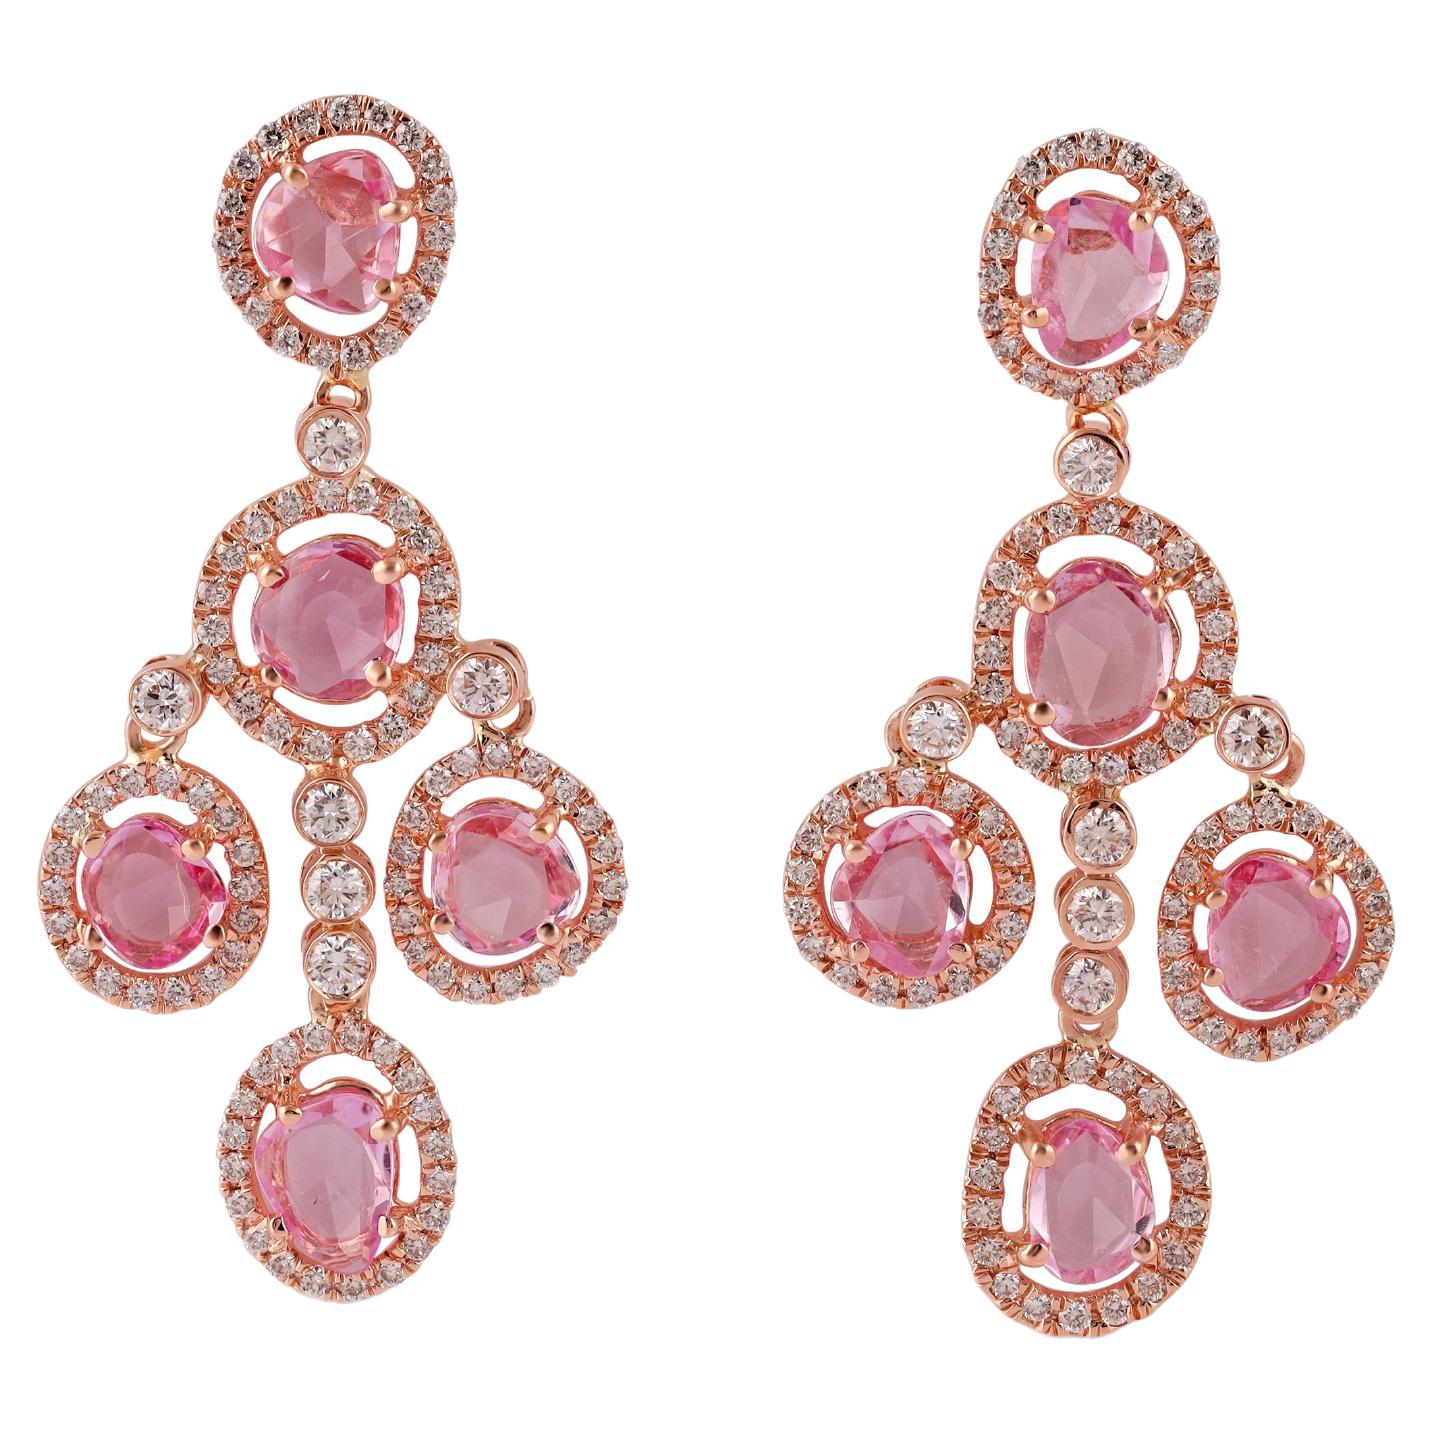 4.23 Carat Pink Sapphire & Diamond Earrings Studded in 18 Karat Rose Gold